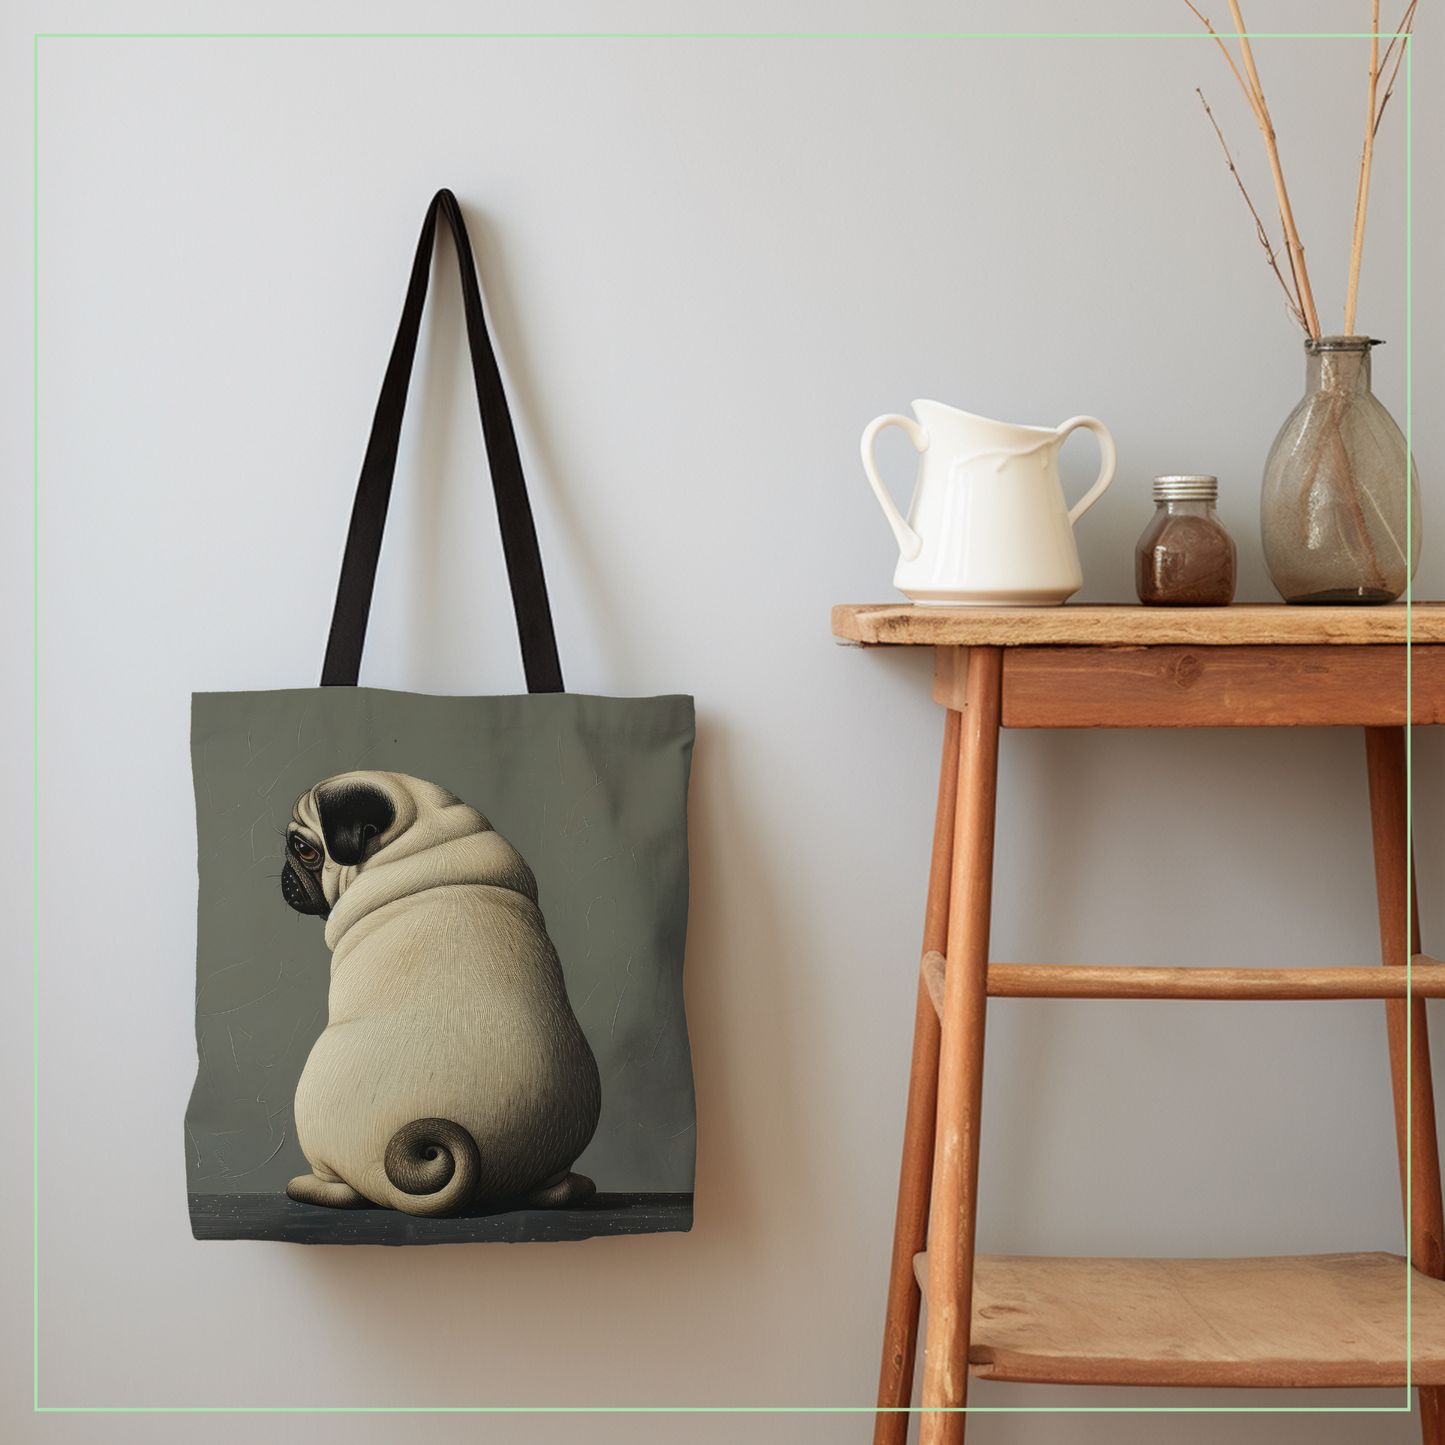 Melancholy - Pug Tote Bag Collection